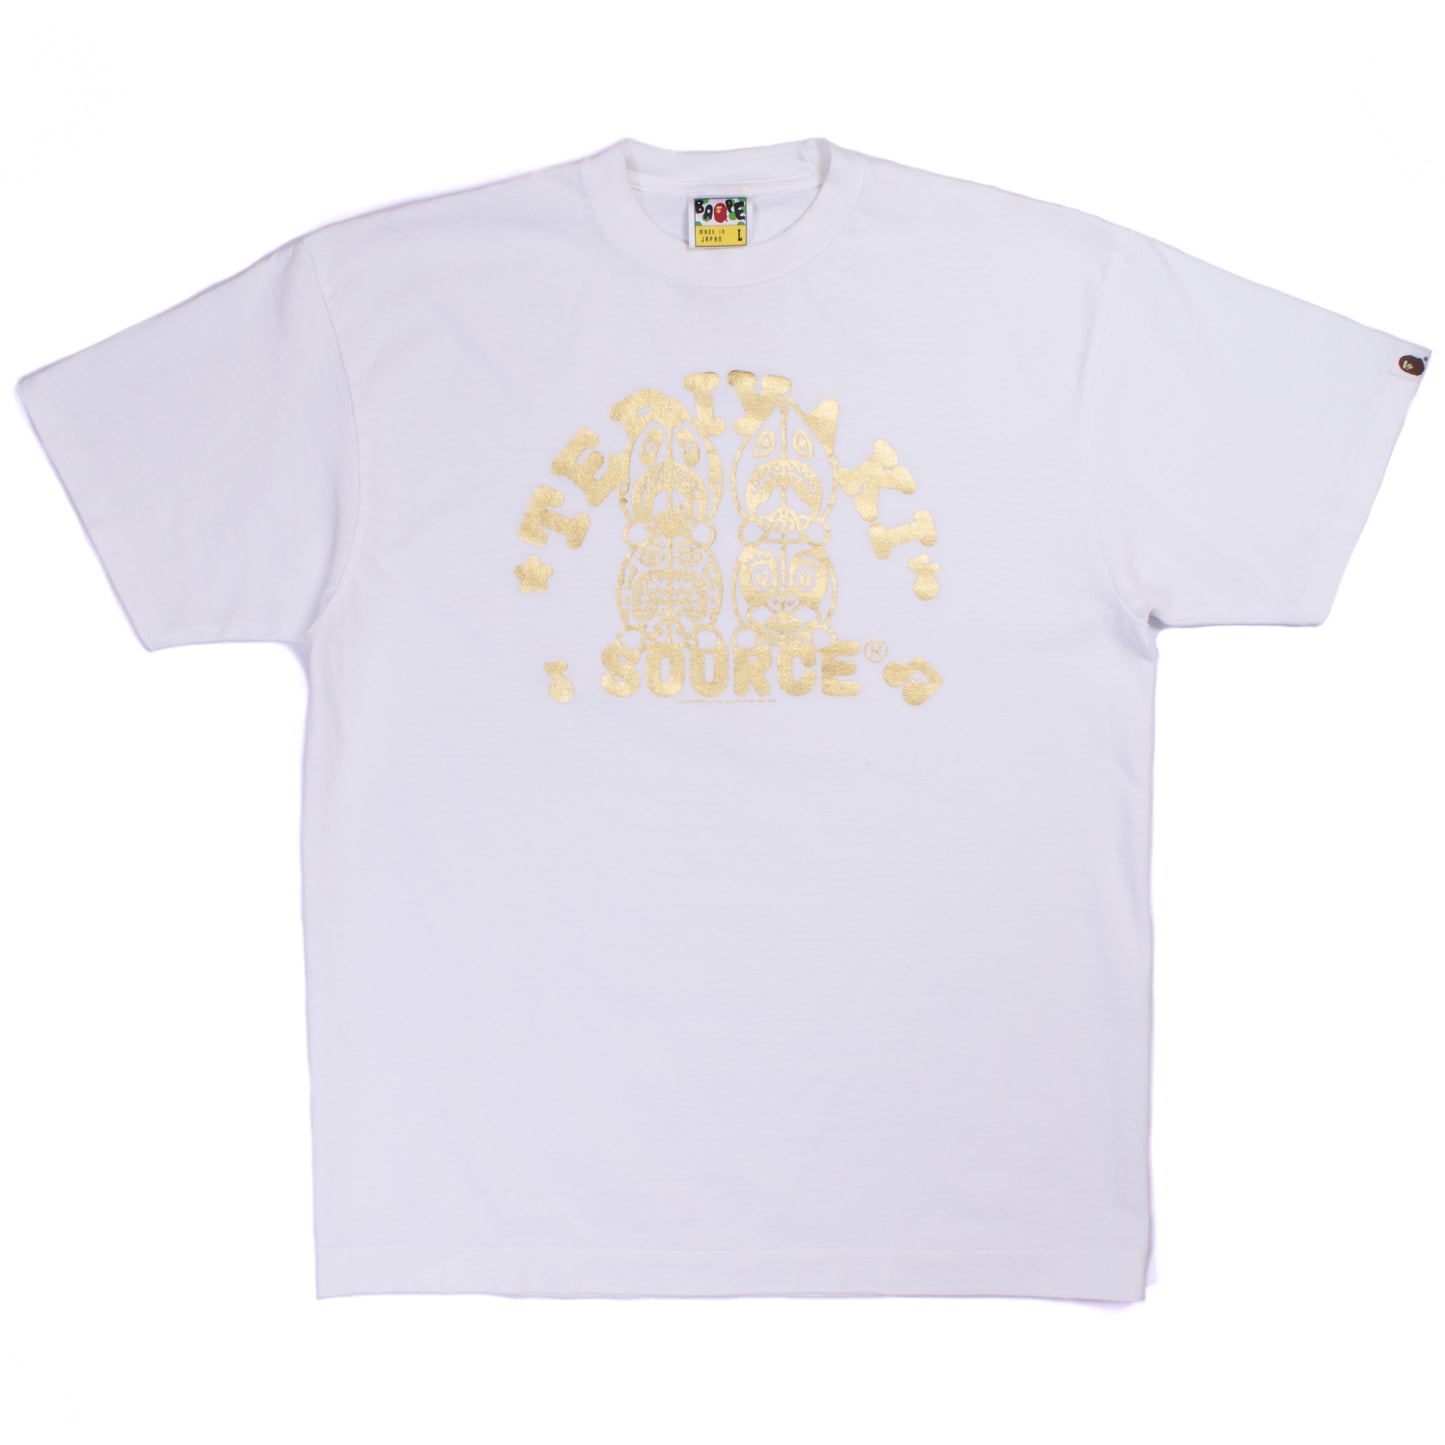 A Bathing Ape Gold Foil "Teriyaki Source" T-Shirt